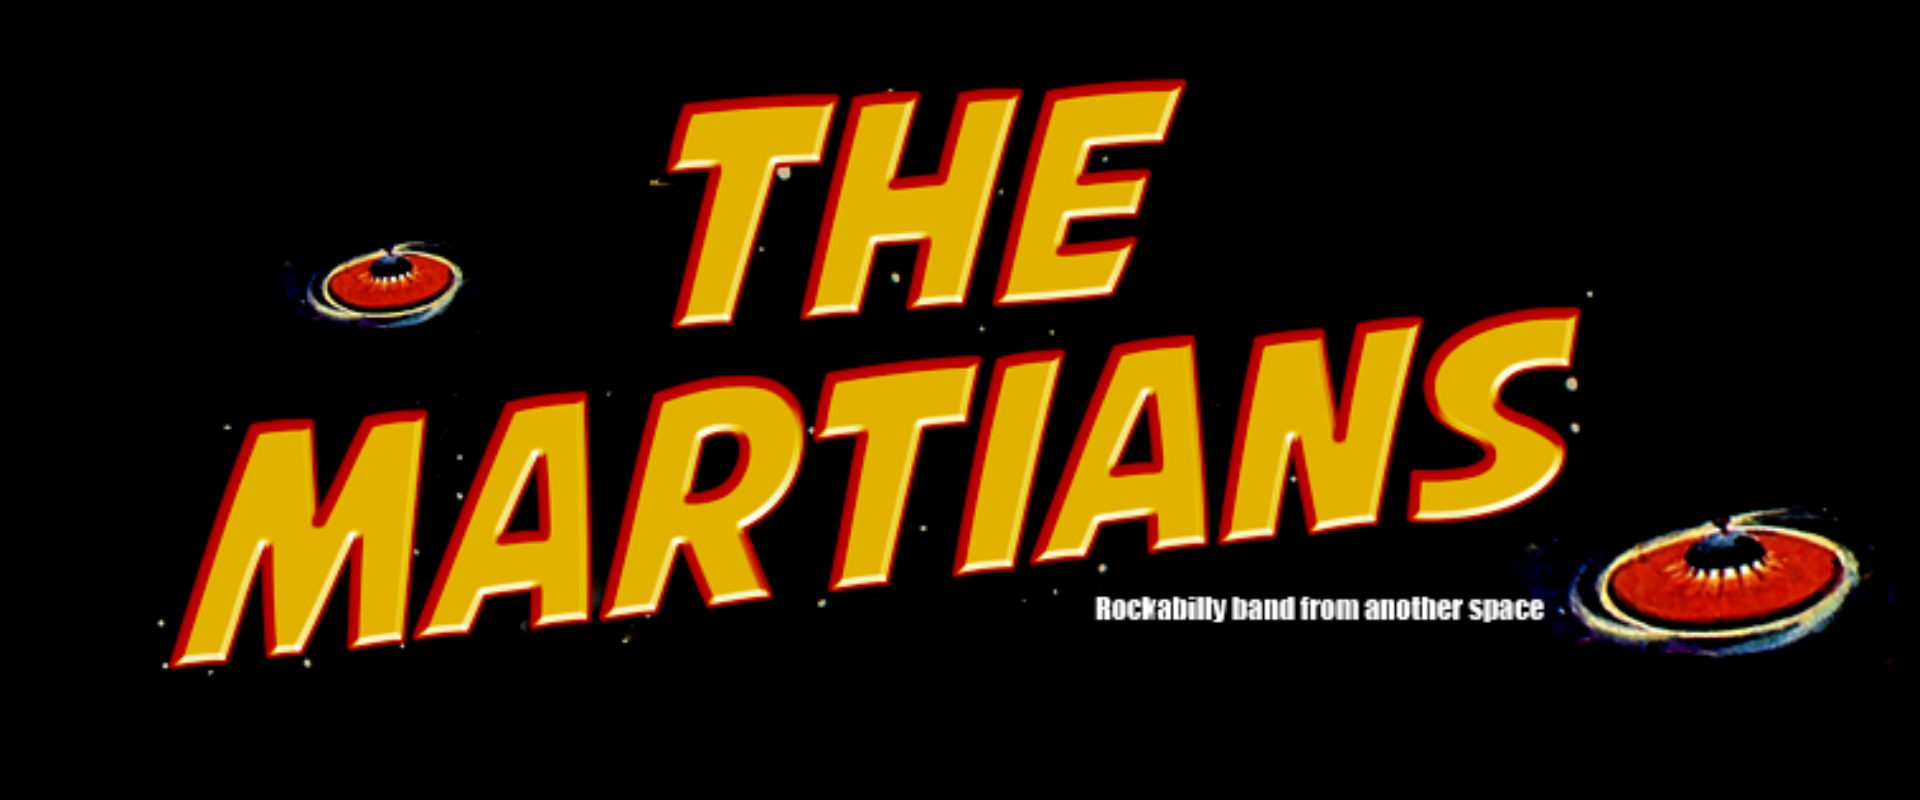 The Martians